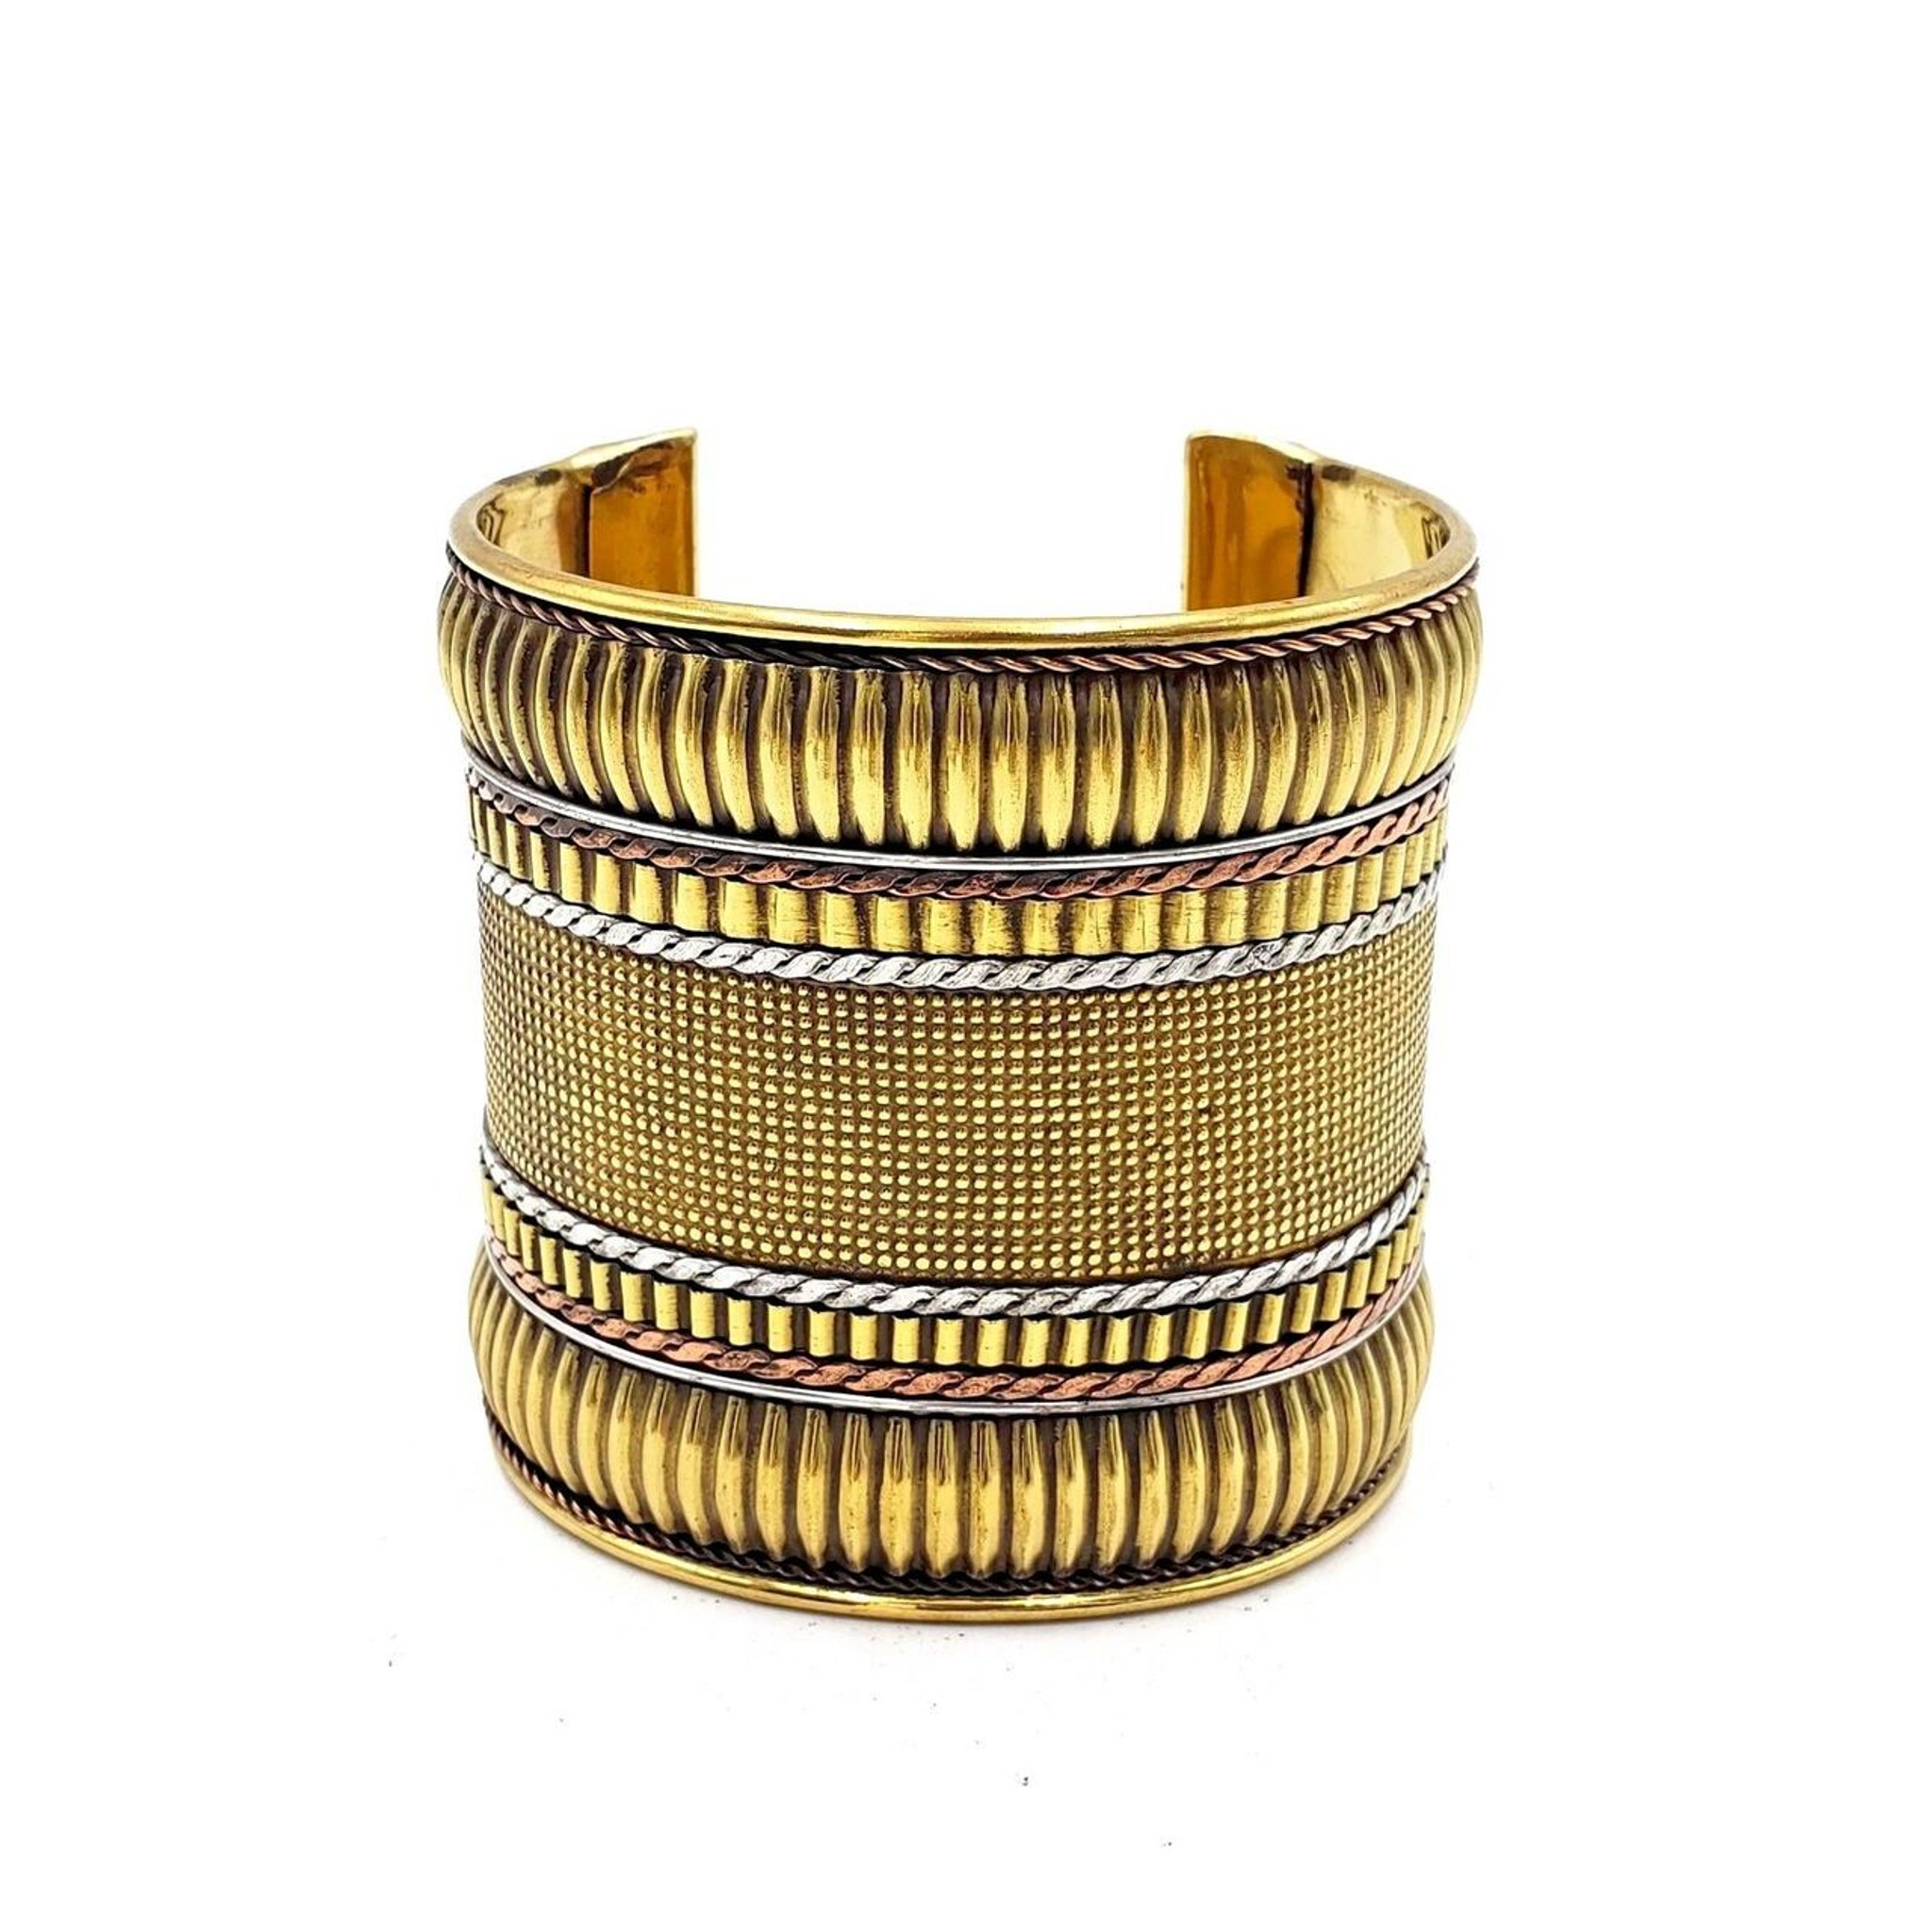 Queenie Ornate Gold Brass Cuff Bracelet in Ethnic Gauntlet / Afghan Cuff Style